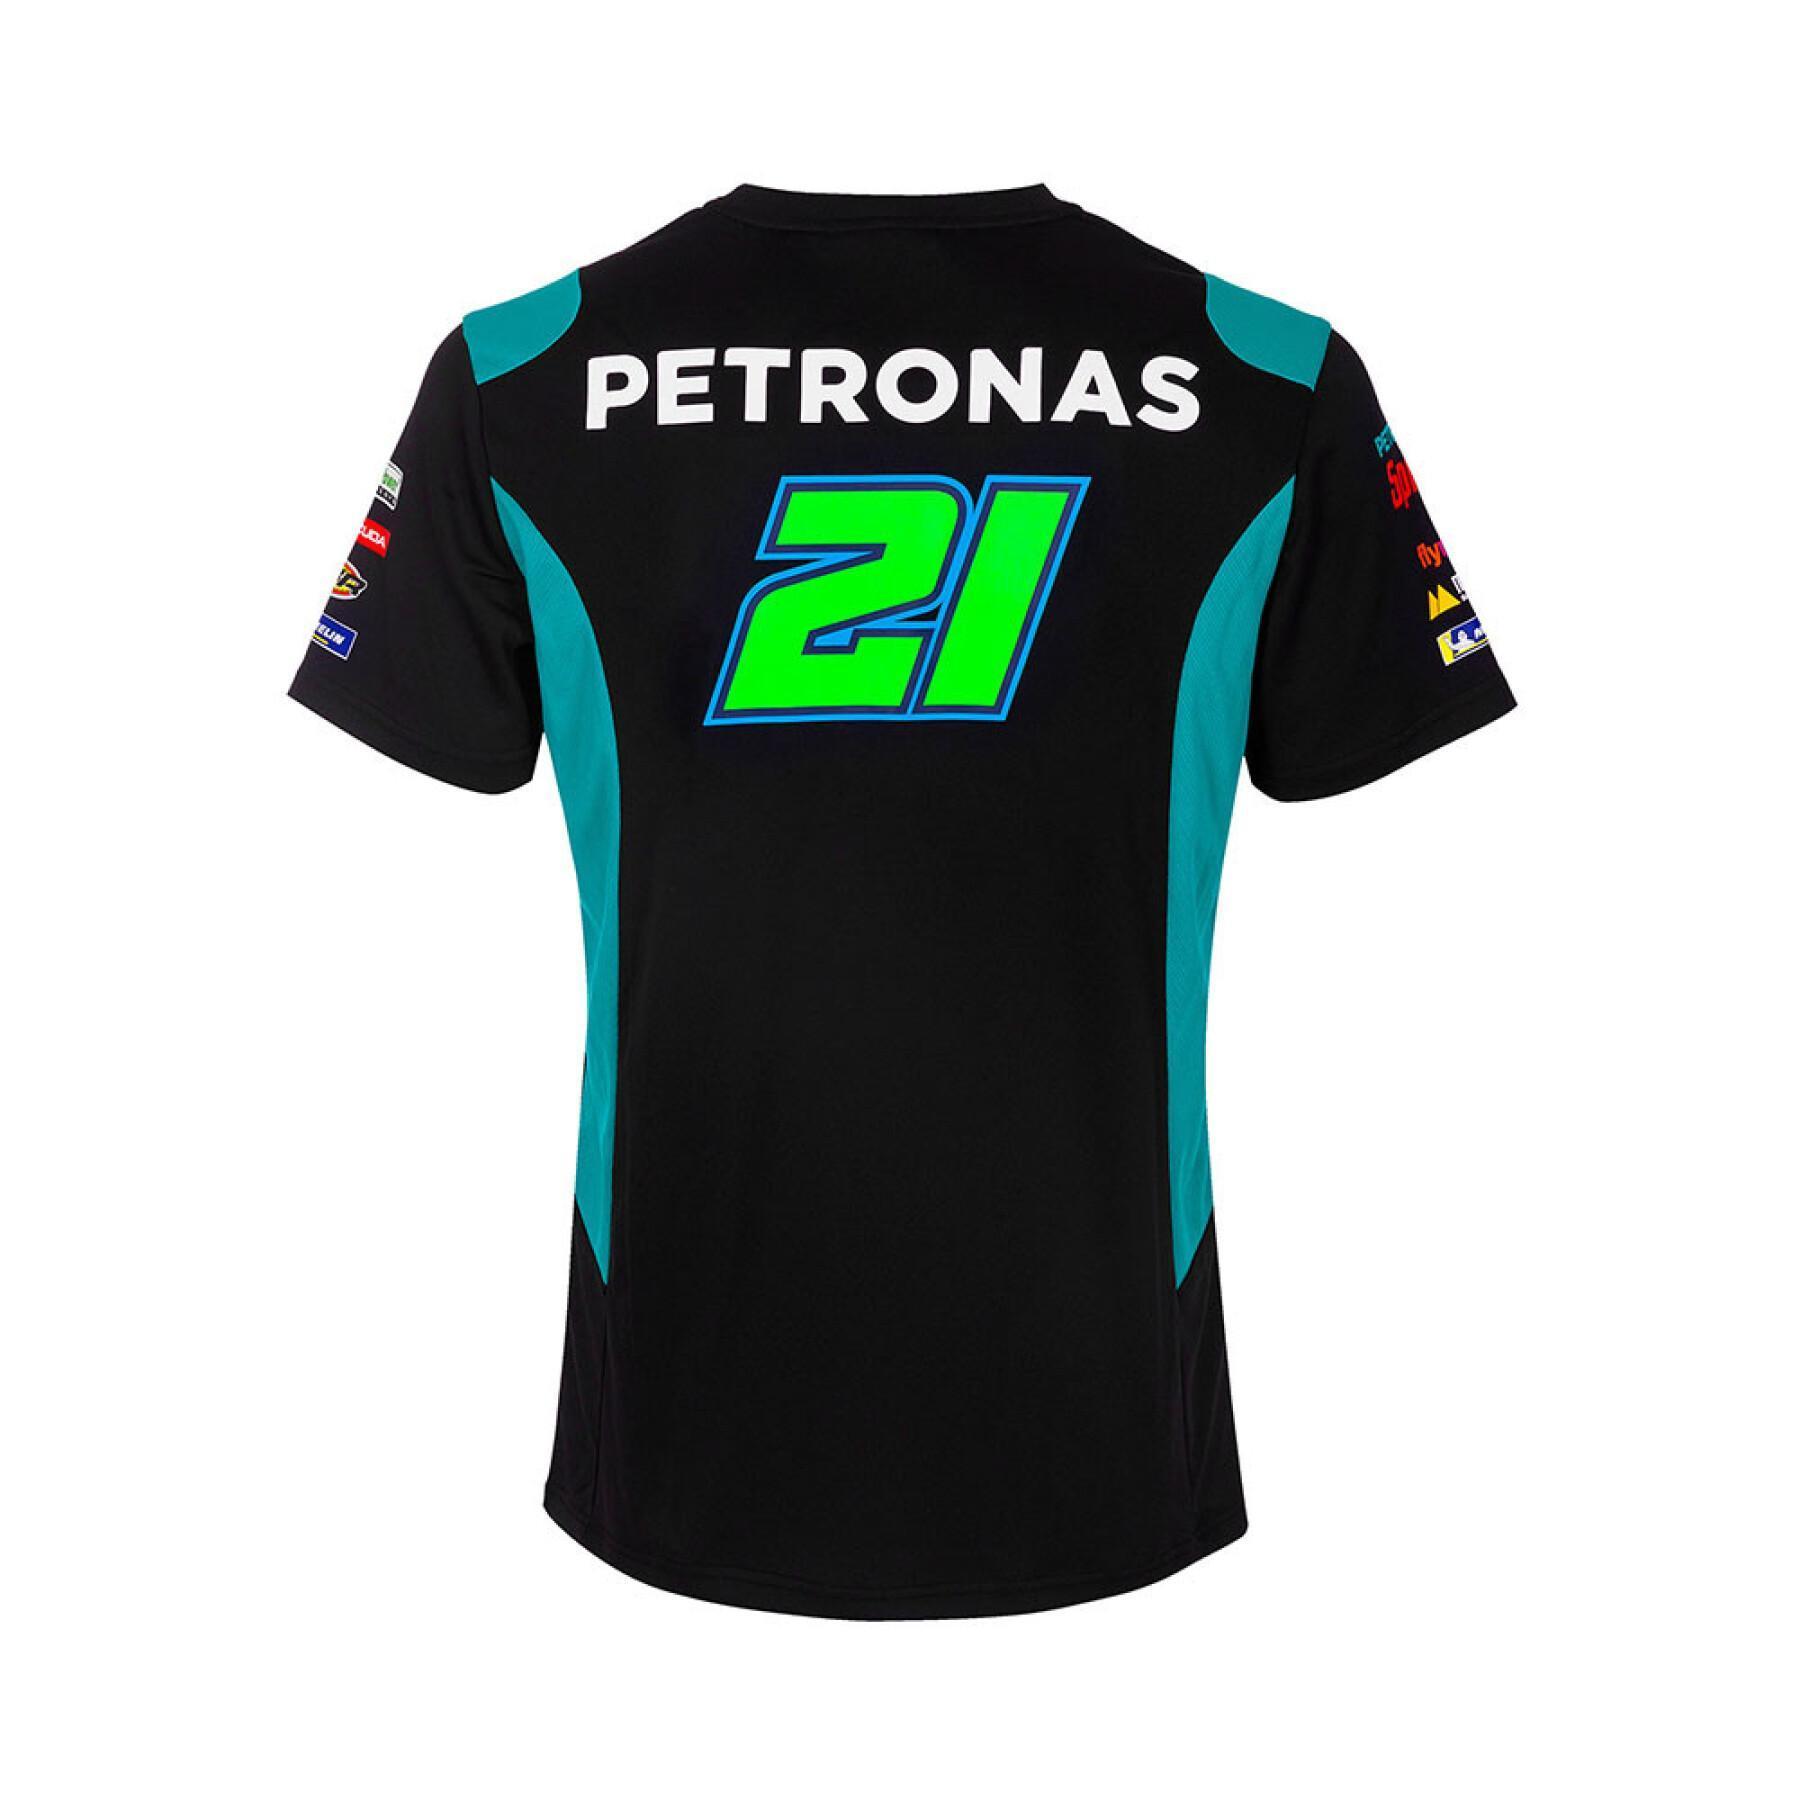 Camiseta VRl46 Petronas morbidelli